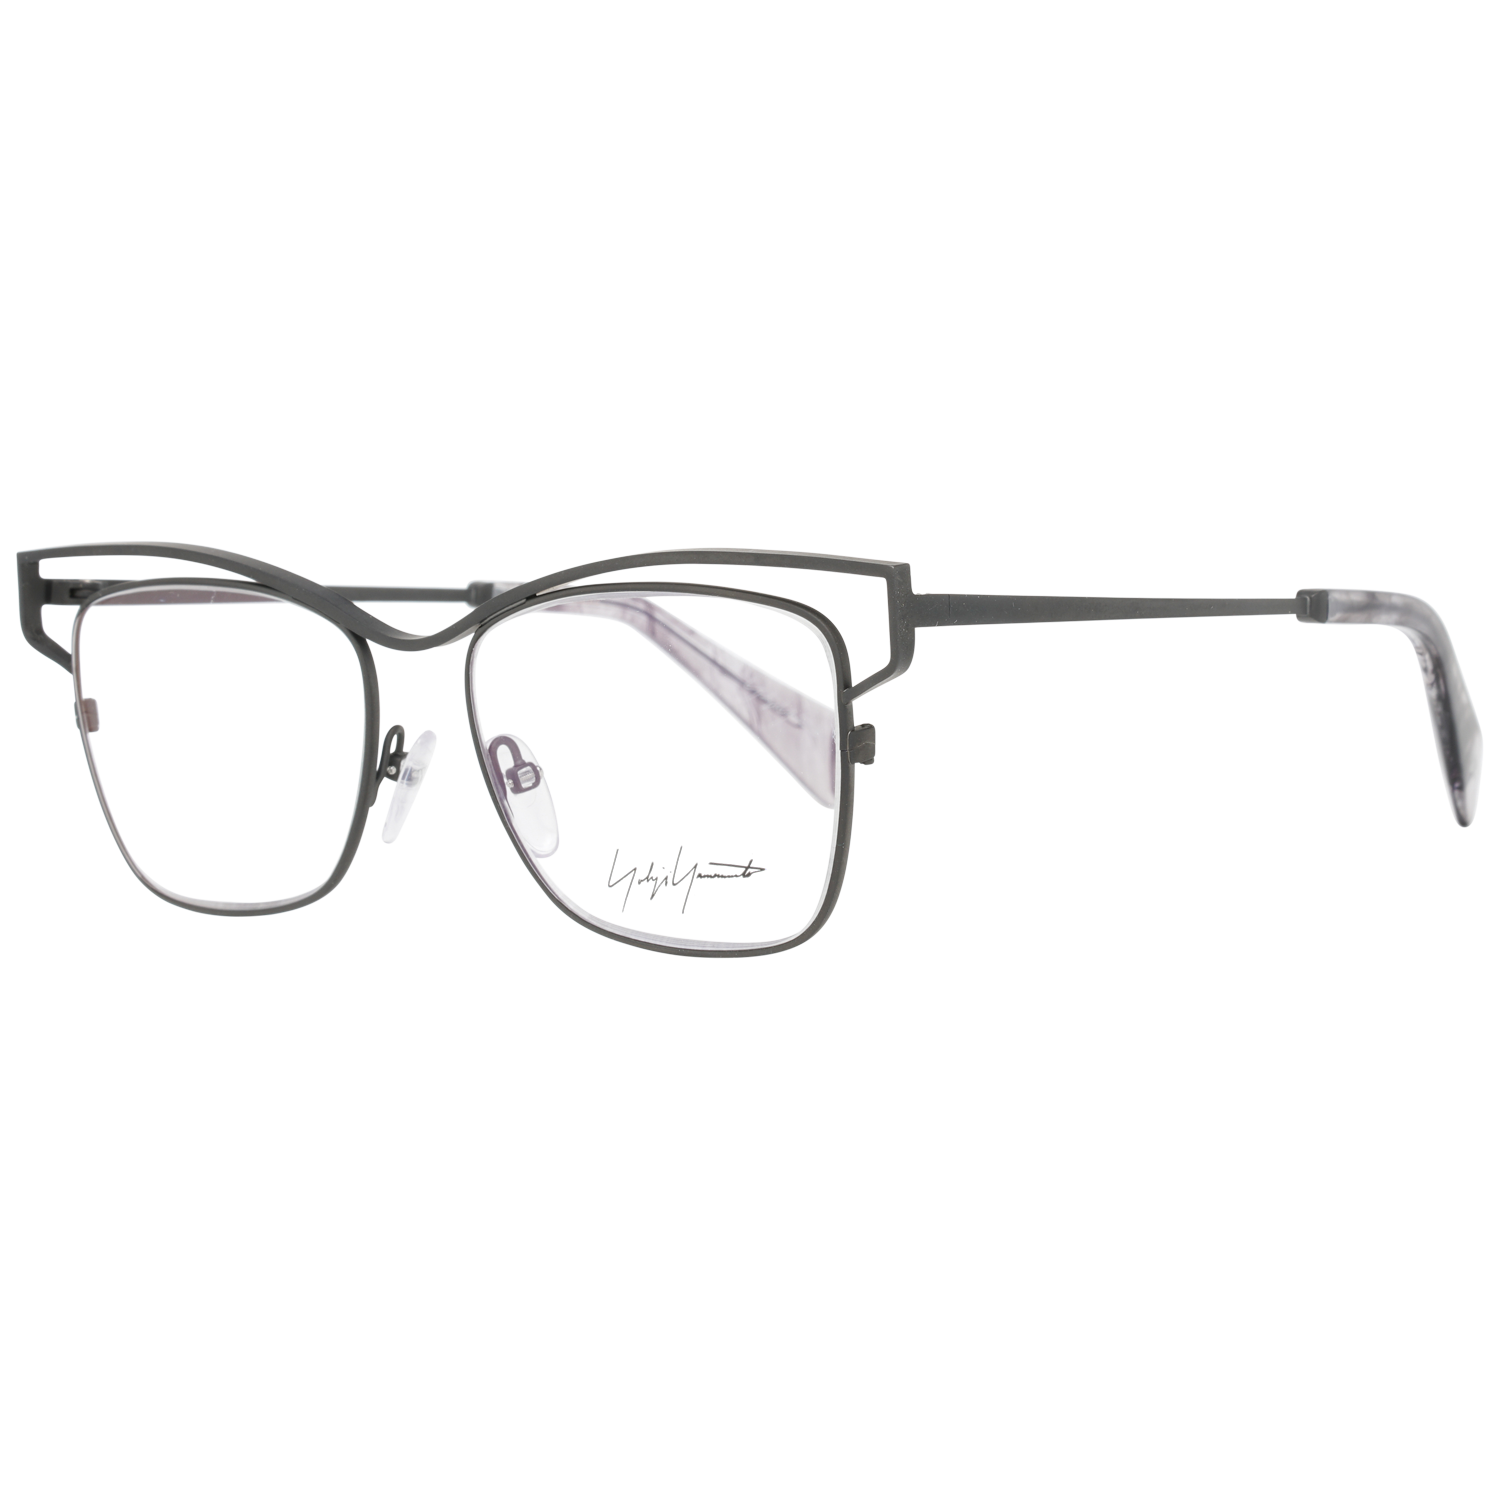 Yohji Yamamoto Frames Yohji Yamamoto Optical Frame YY3019 902 51 Eyeglasses Eyewear UK USA Australia 